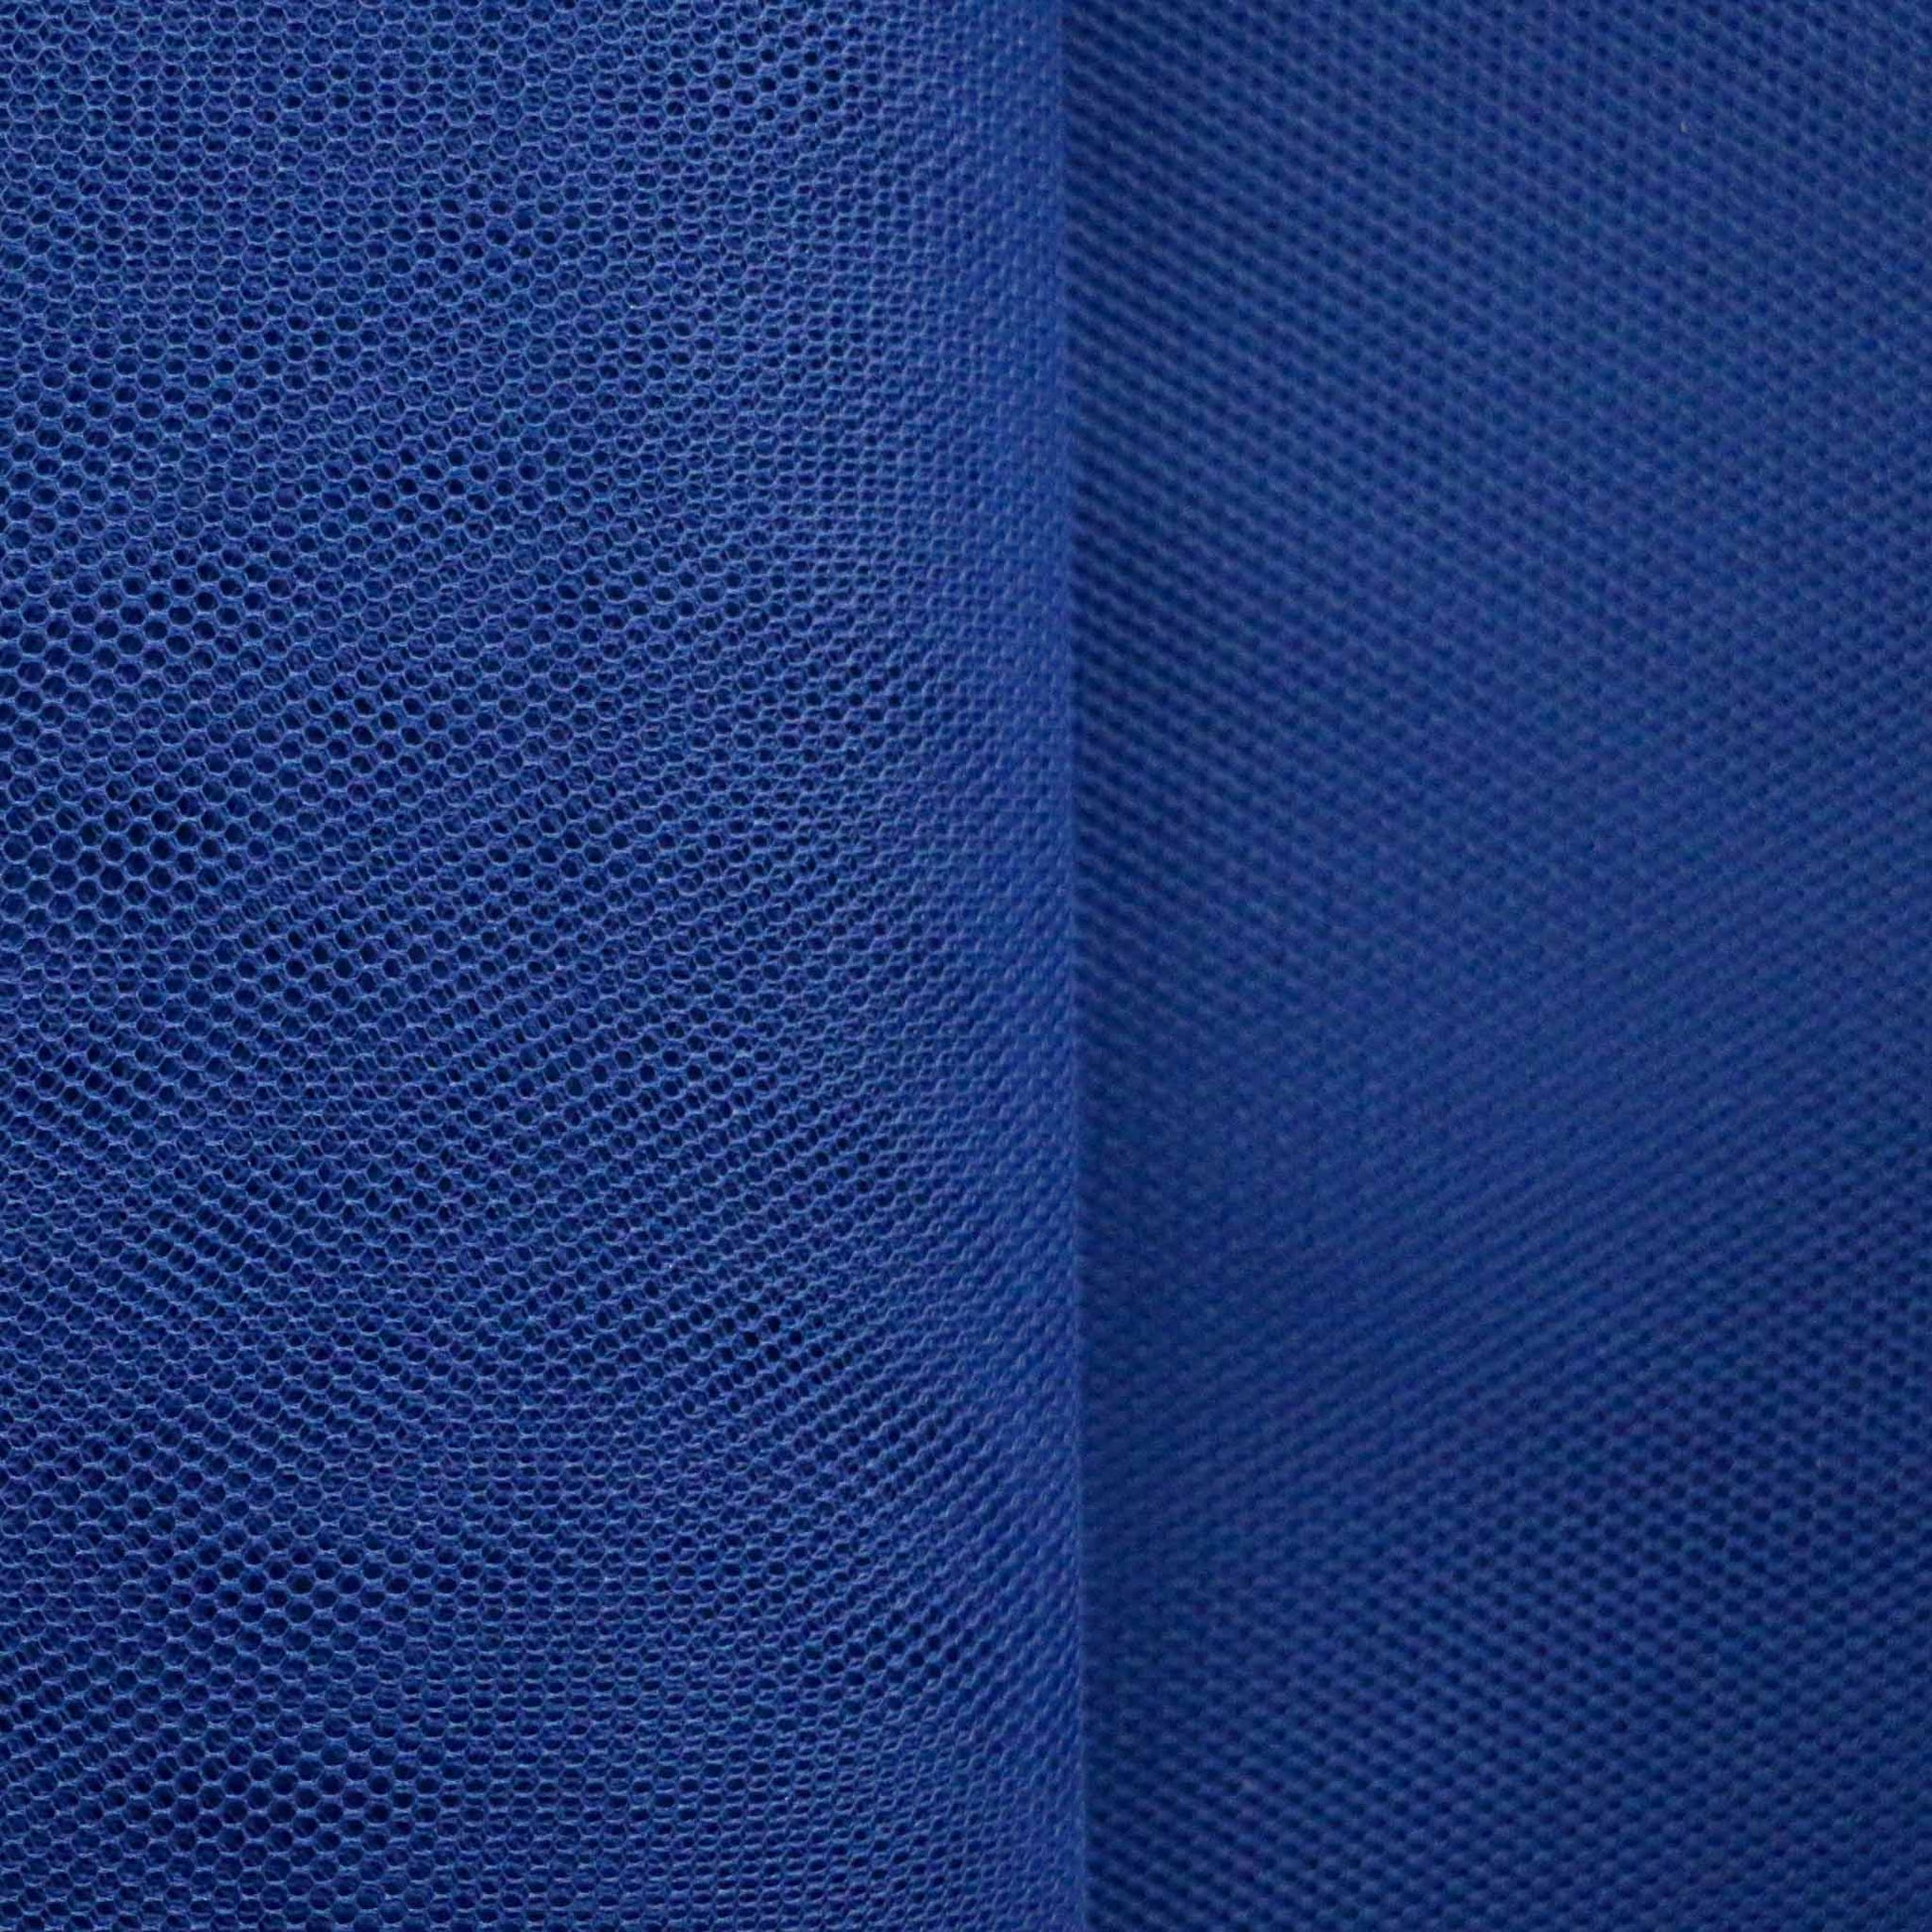 blue dressmaking netting tulle fabric